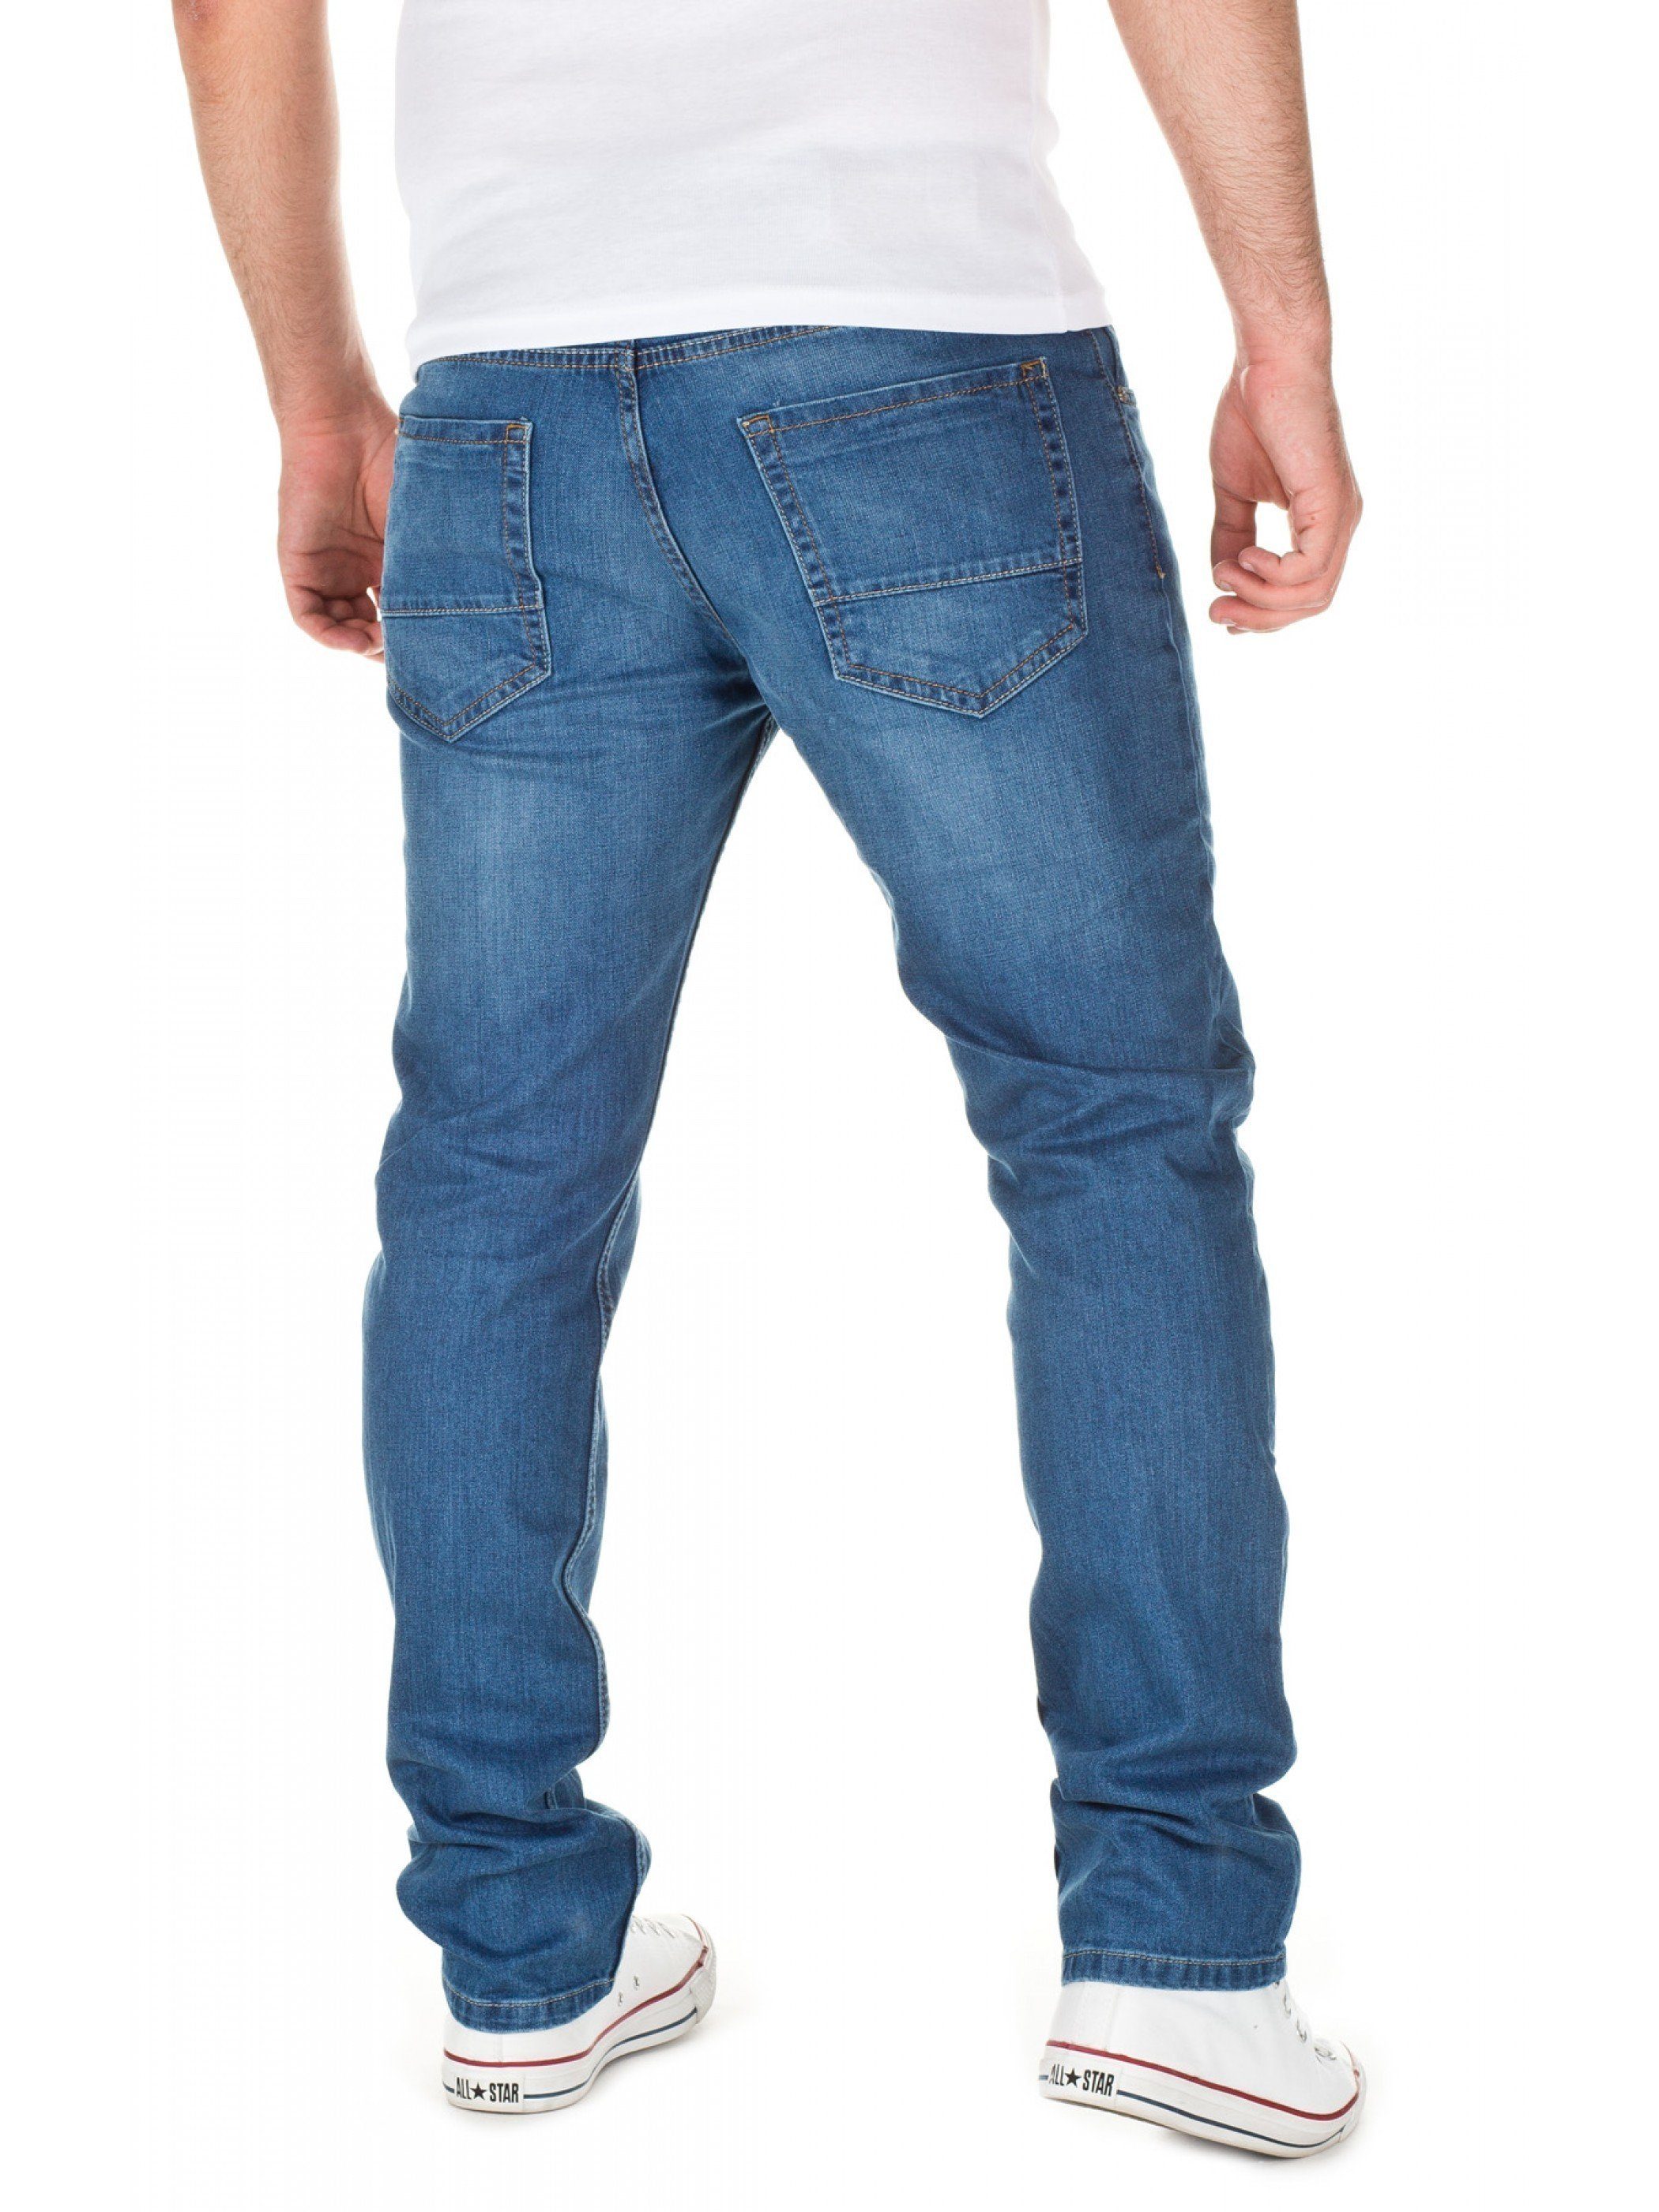 WOTEGA Slim-fit-Jeans Jeans Travis Blau indigo 3928) (blue